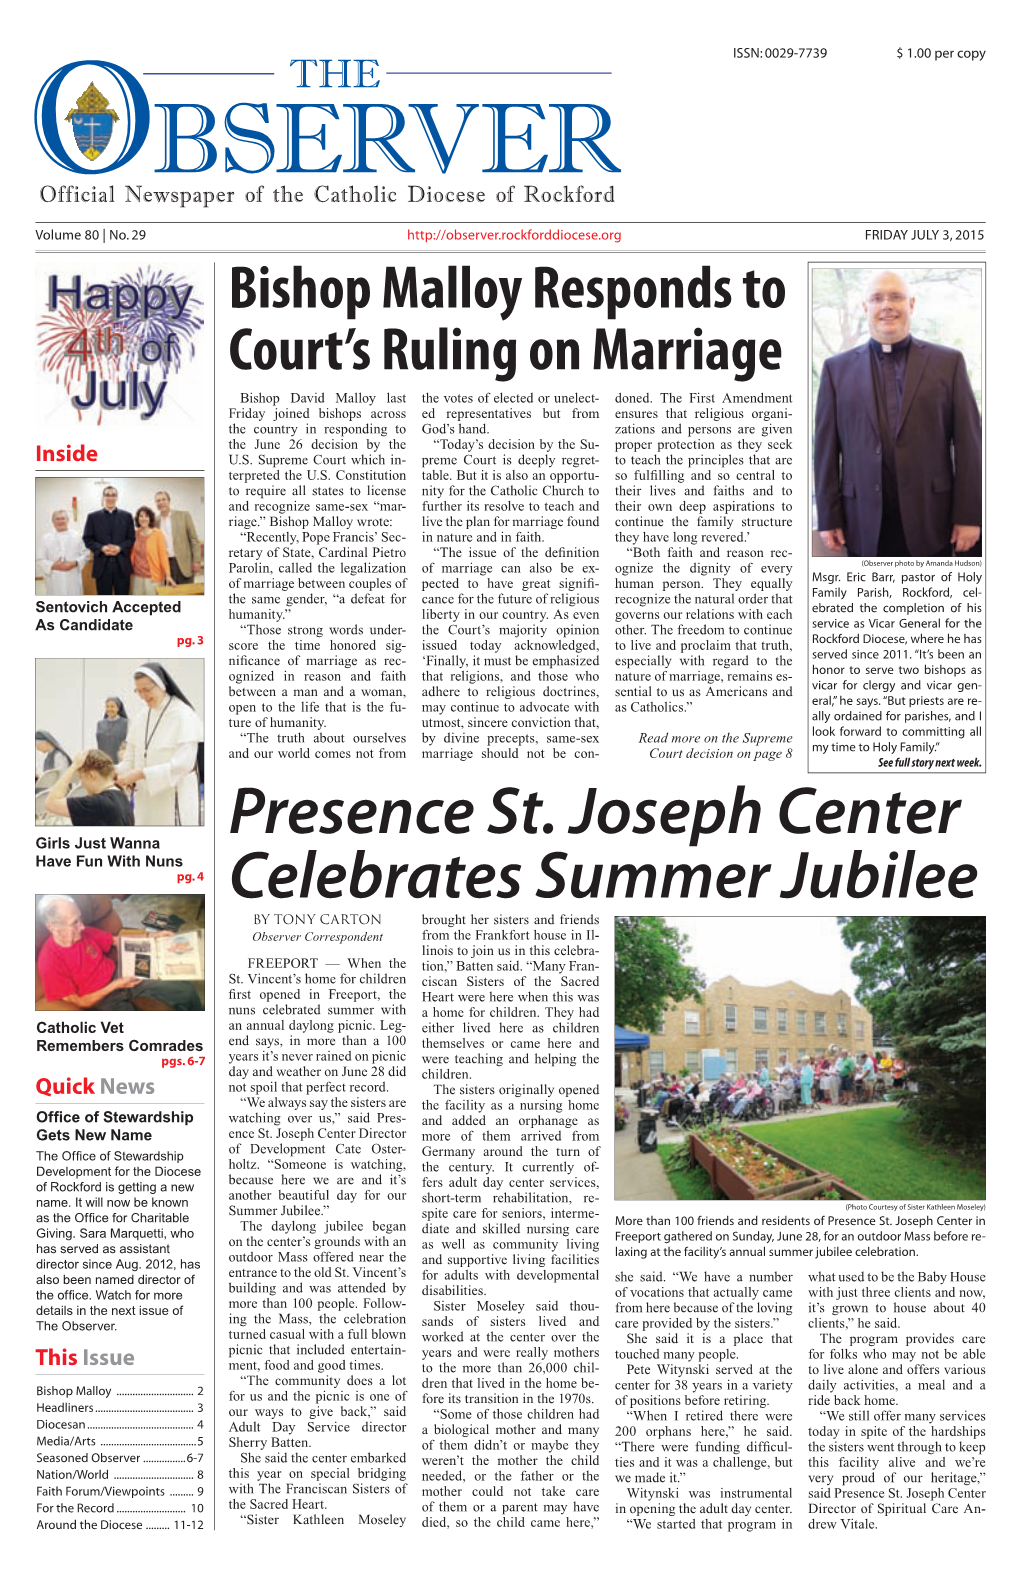 Presence St. Joseph Center Celebrates Summer Jubilee Bishop